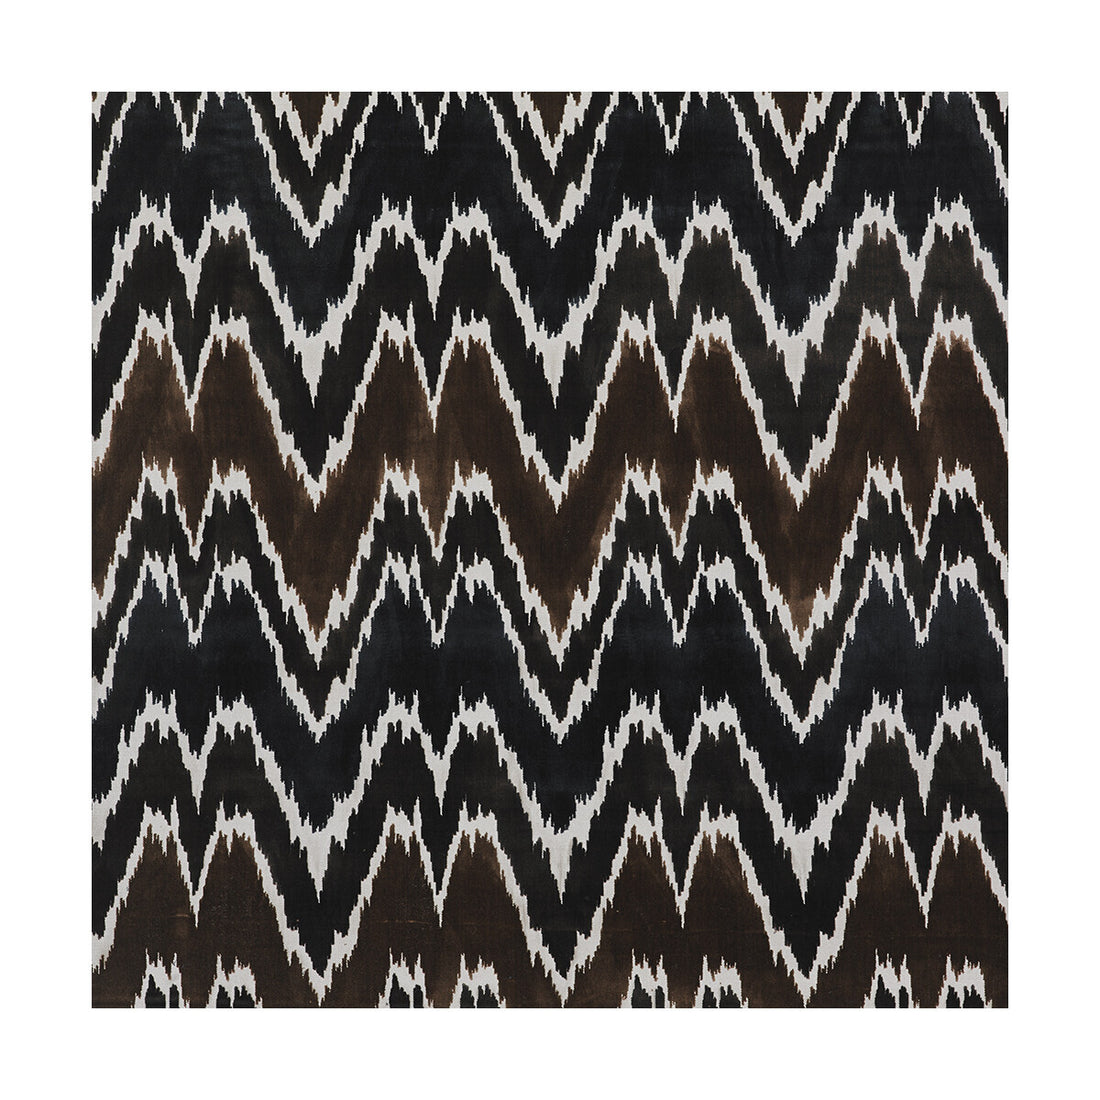 Alejandro fabric in marino/chocolate color - pattern LCT5359.002.0 - by Gaston y Daniela in the Lorenzo Castillo III collection